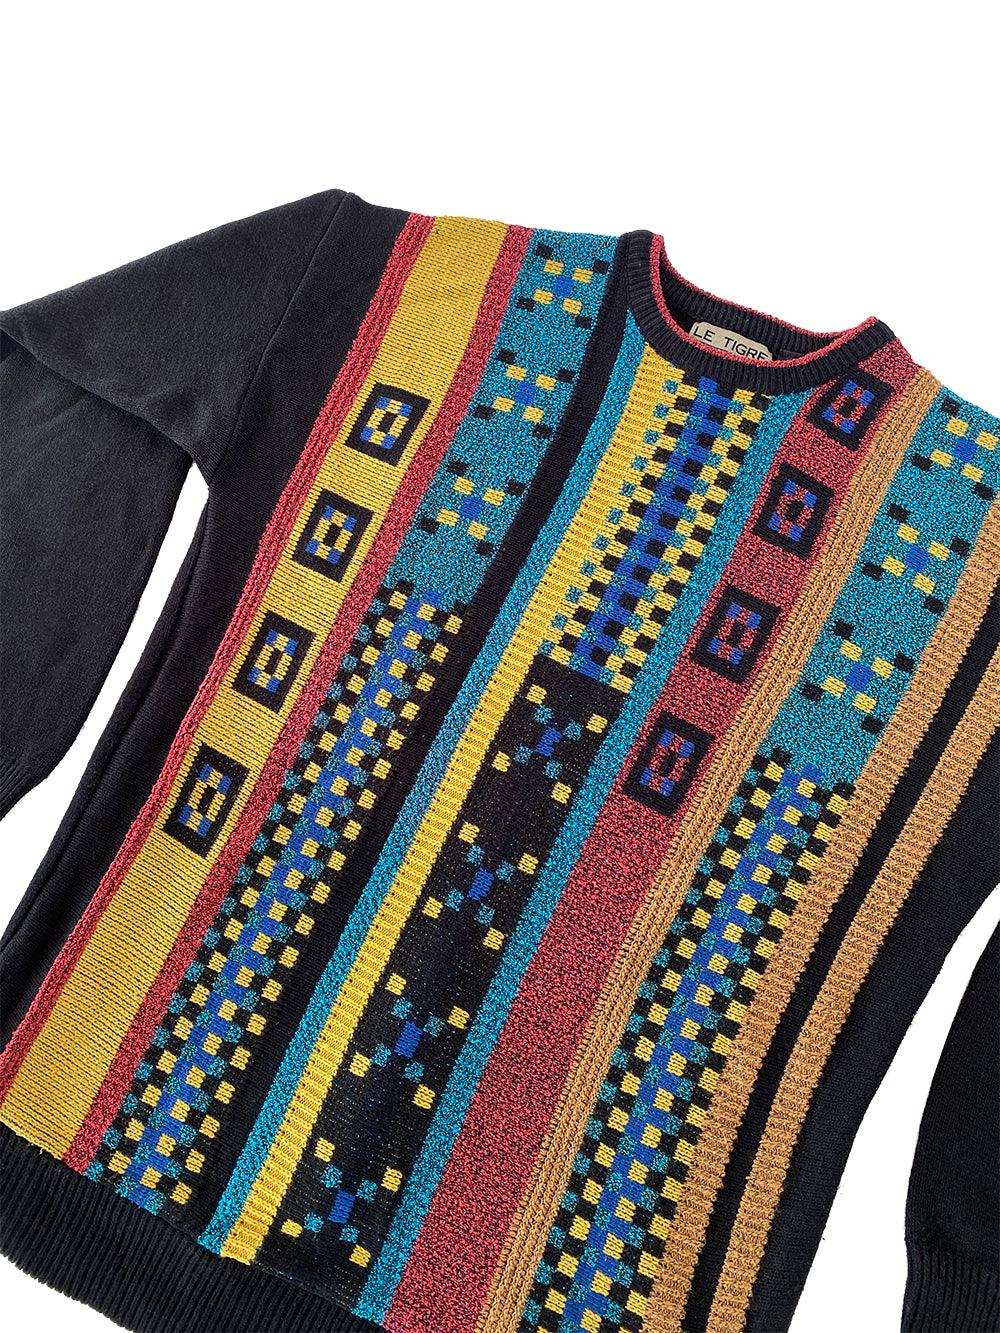 Vintage 80s Le Tigre Geometric Patterned Knit Sweater